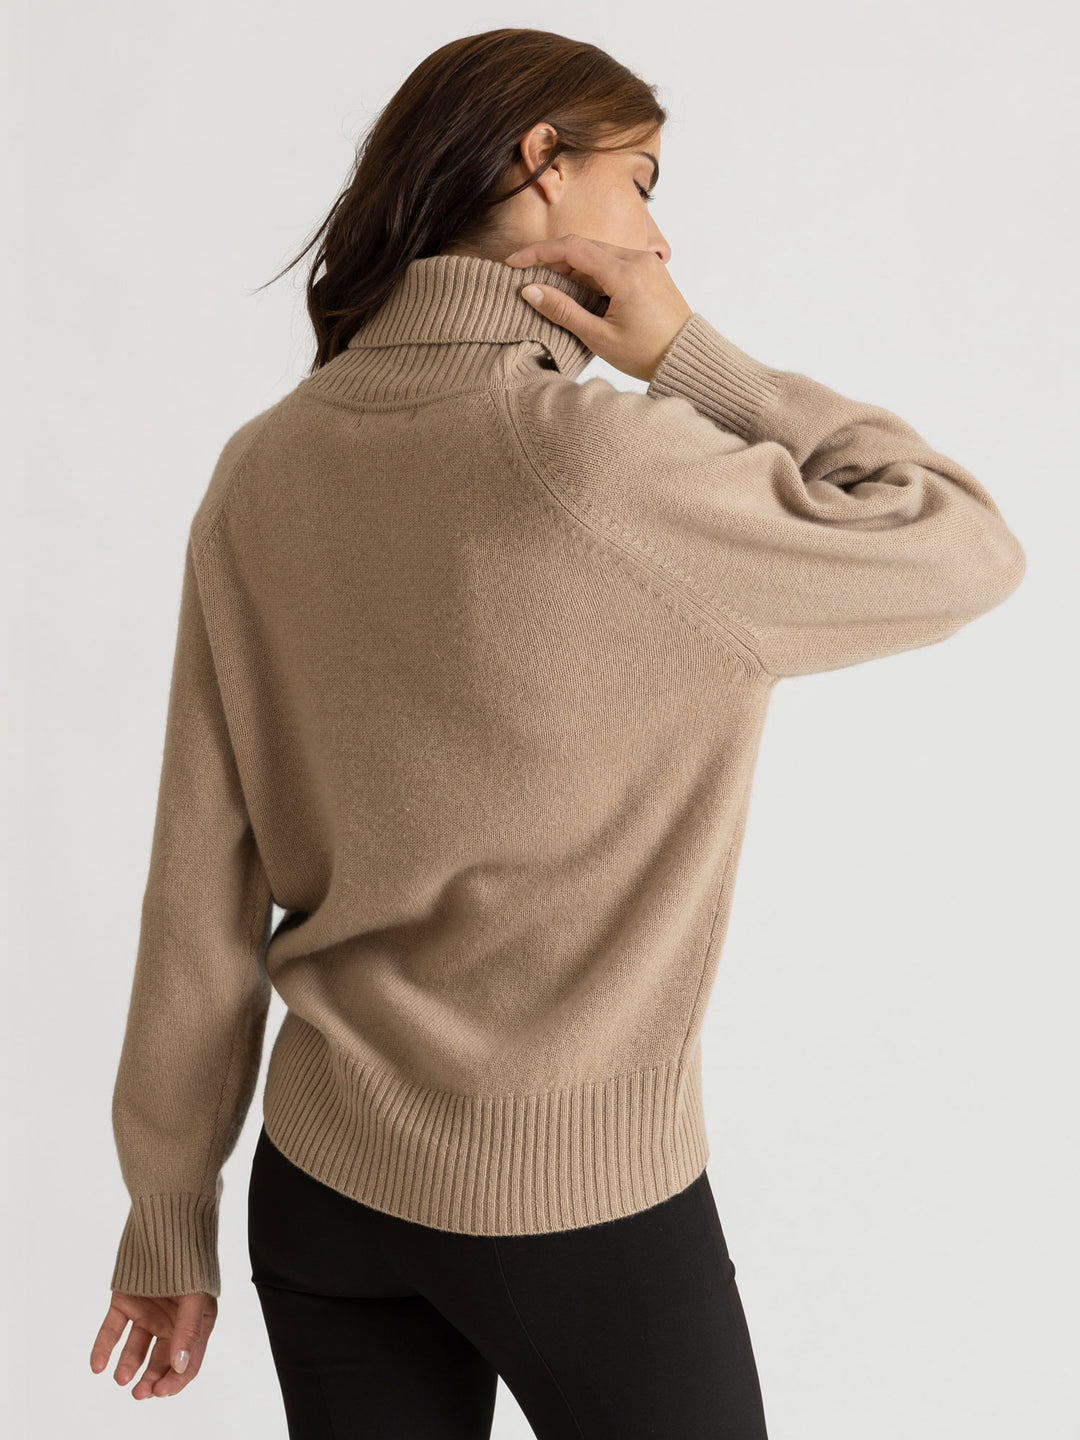 kashmina cashmere sweater milano sand wool norwegian design sustainable fashion